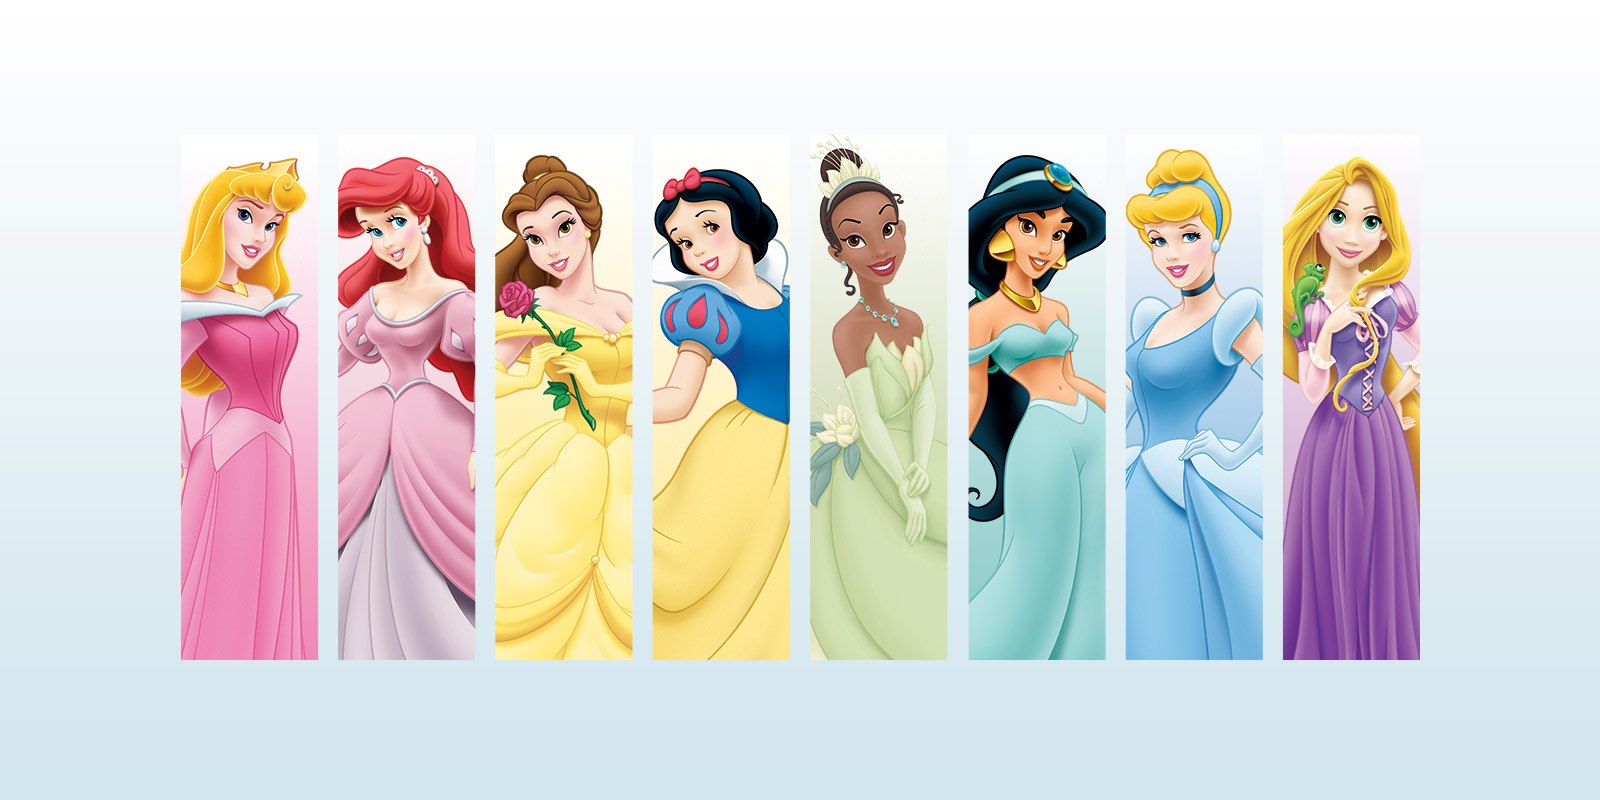 Disney Princess - Disney Princess Photo (32307844) - Fanpop